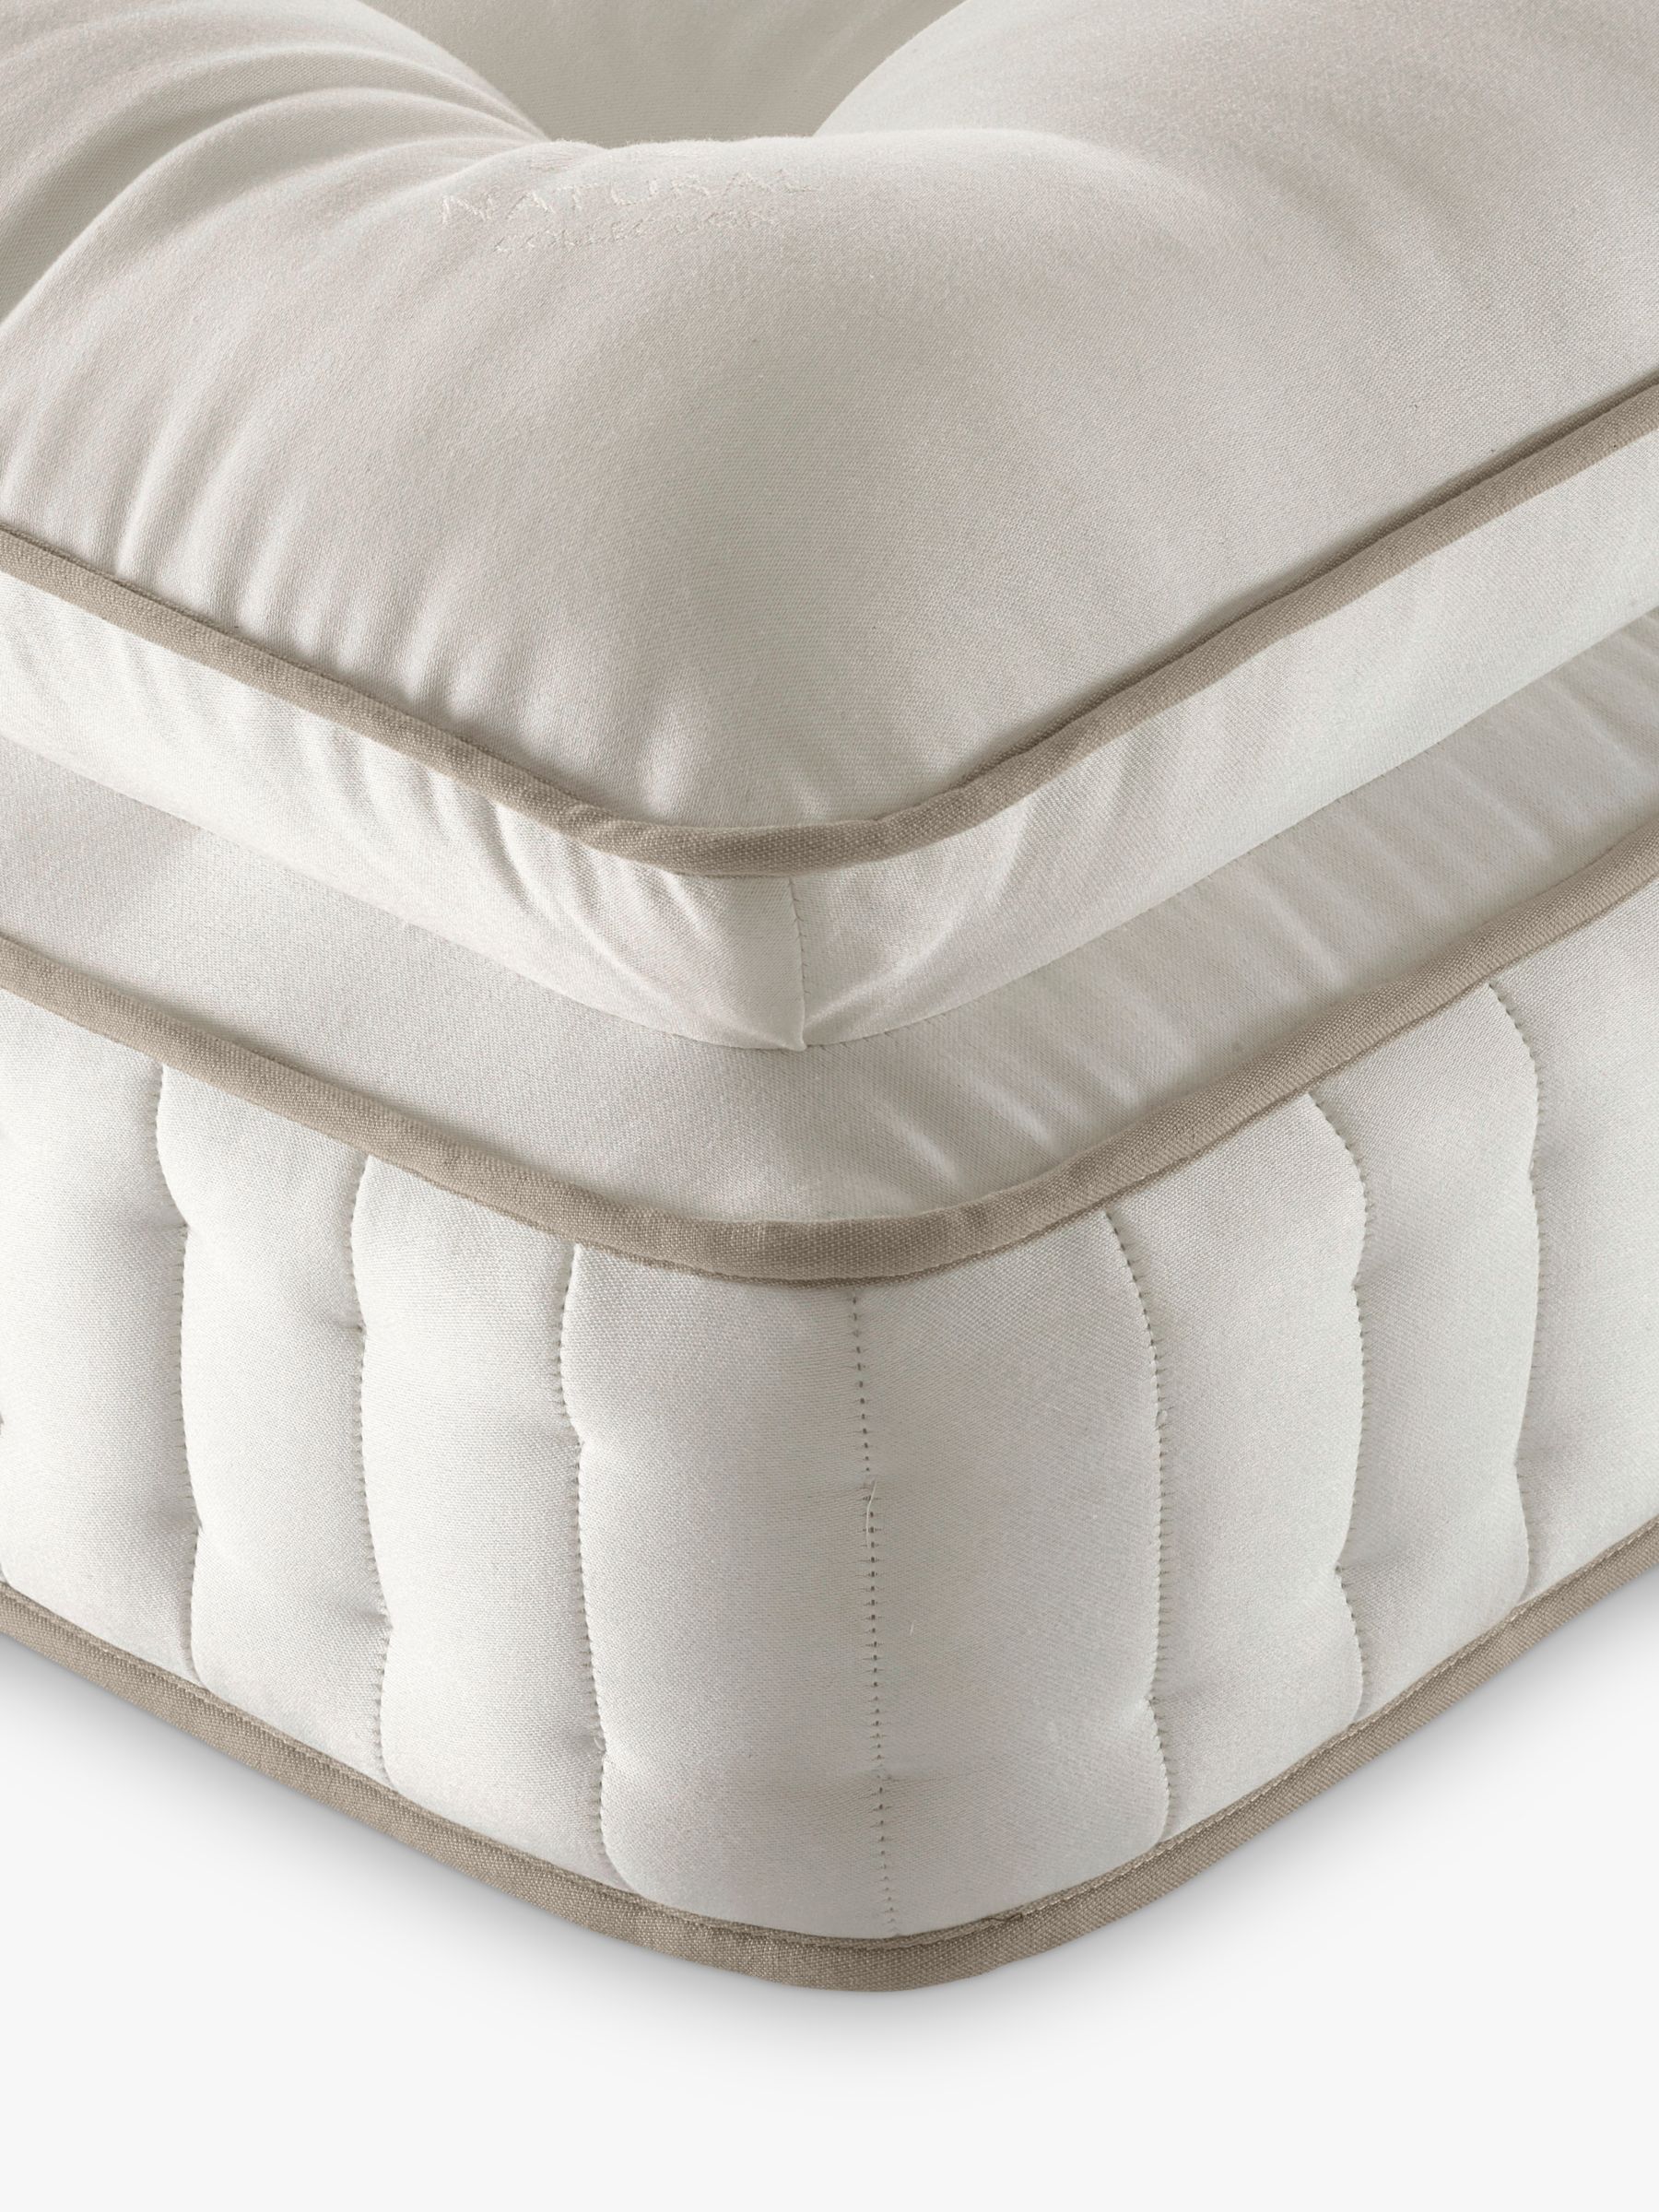 Photo of John lewis luxury natural collection mohair pillowtop 16000 super king size regular tension pocket spring zip link mattress